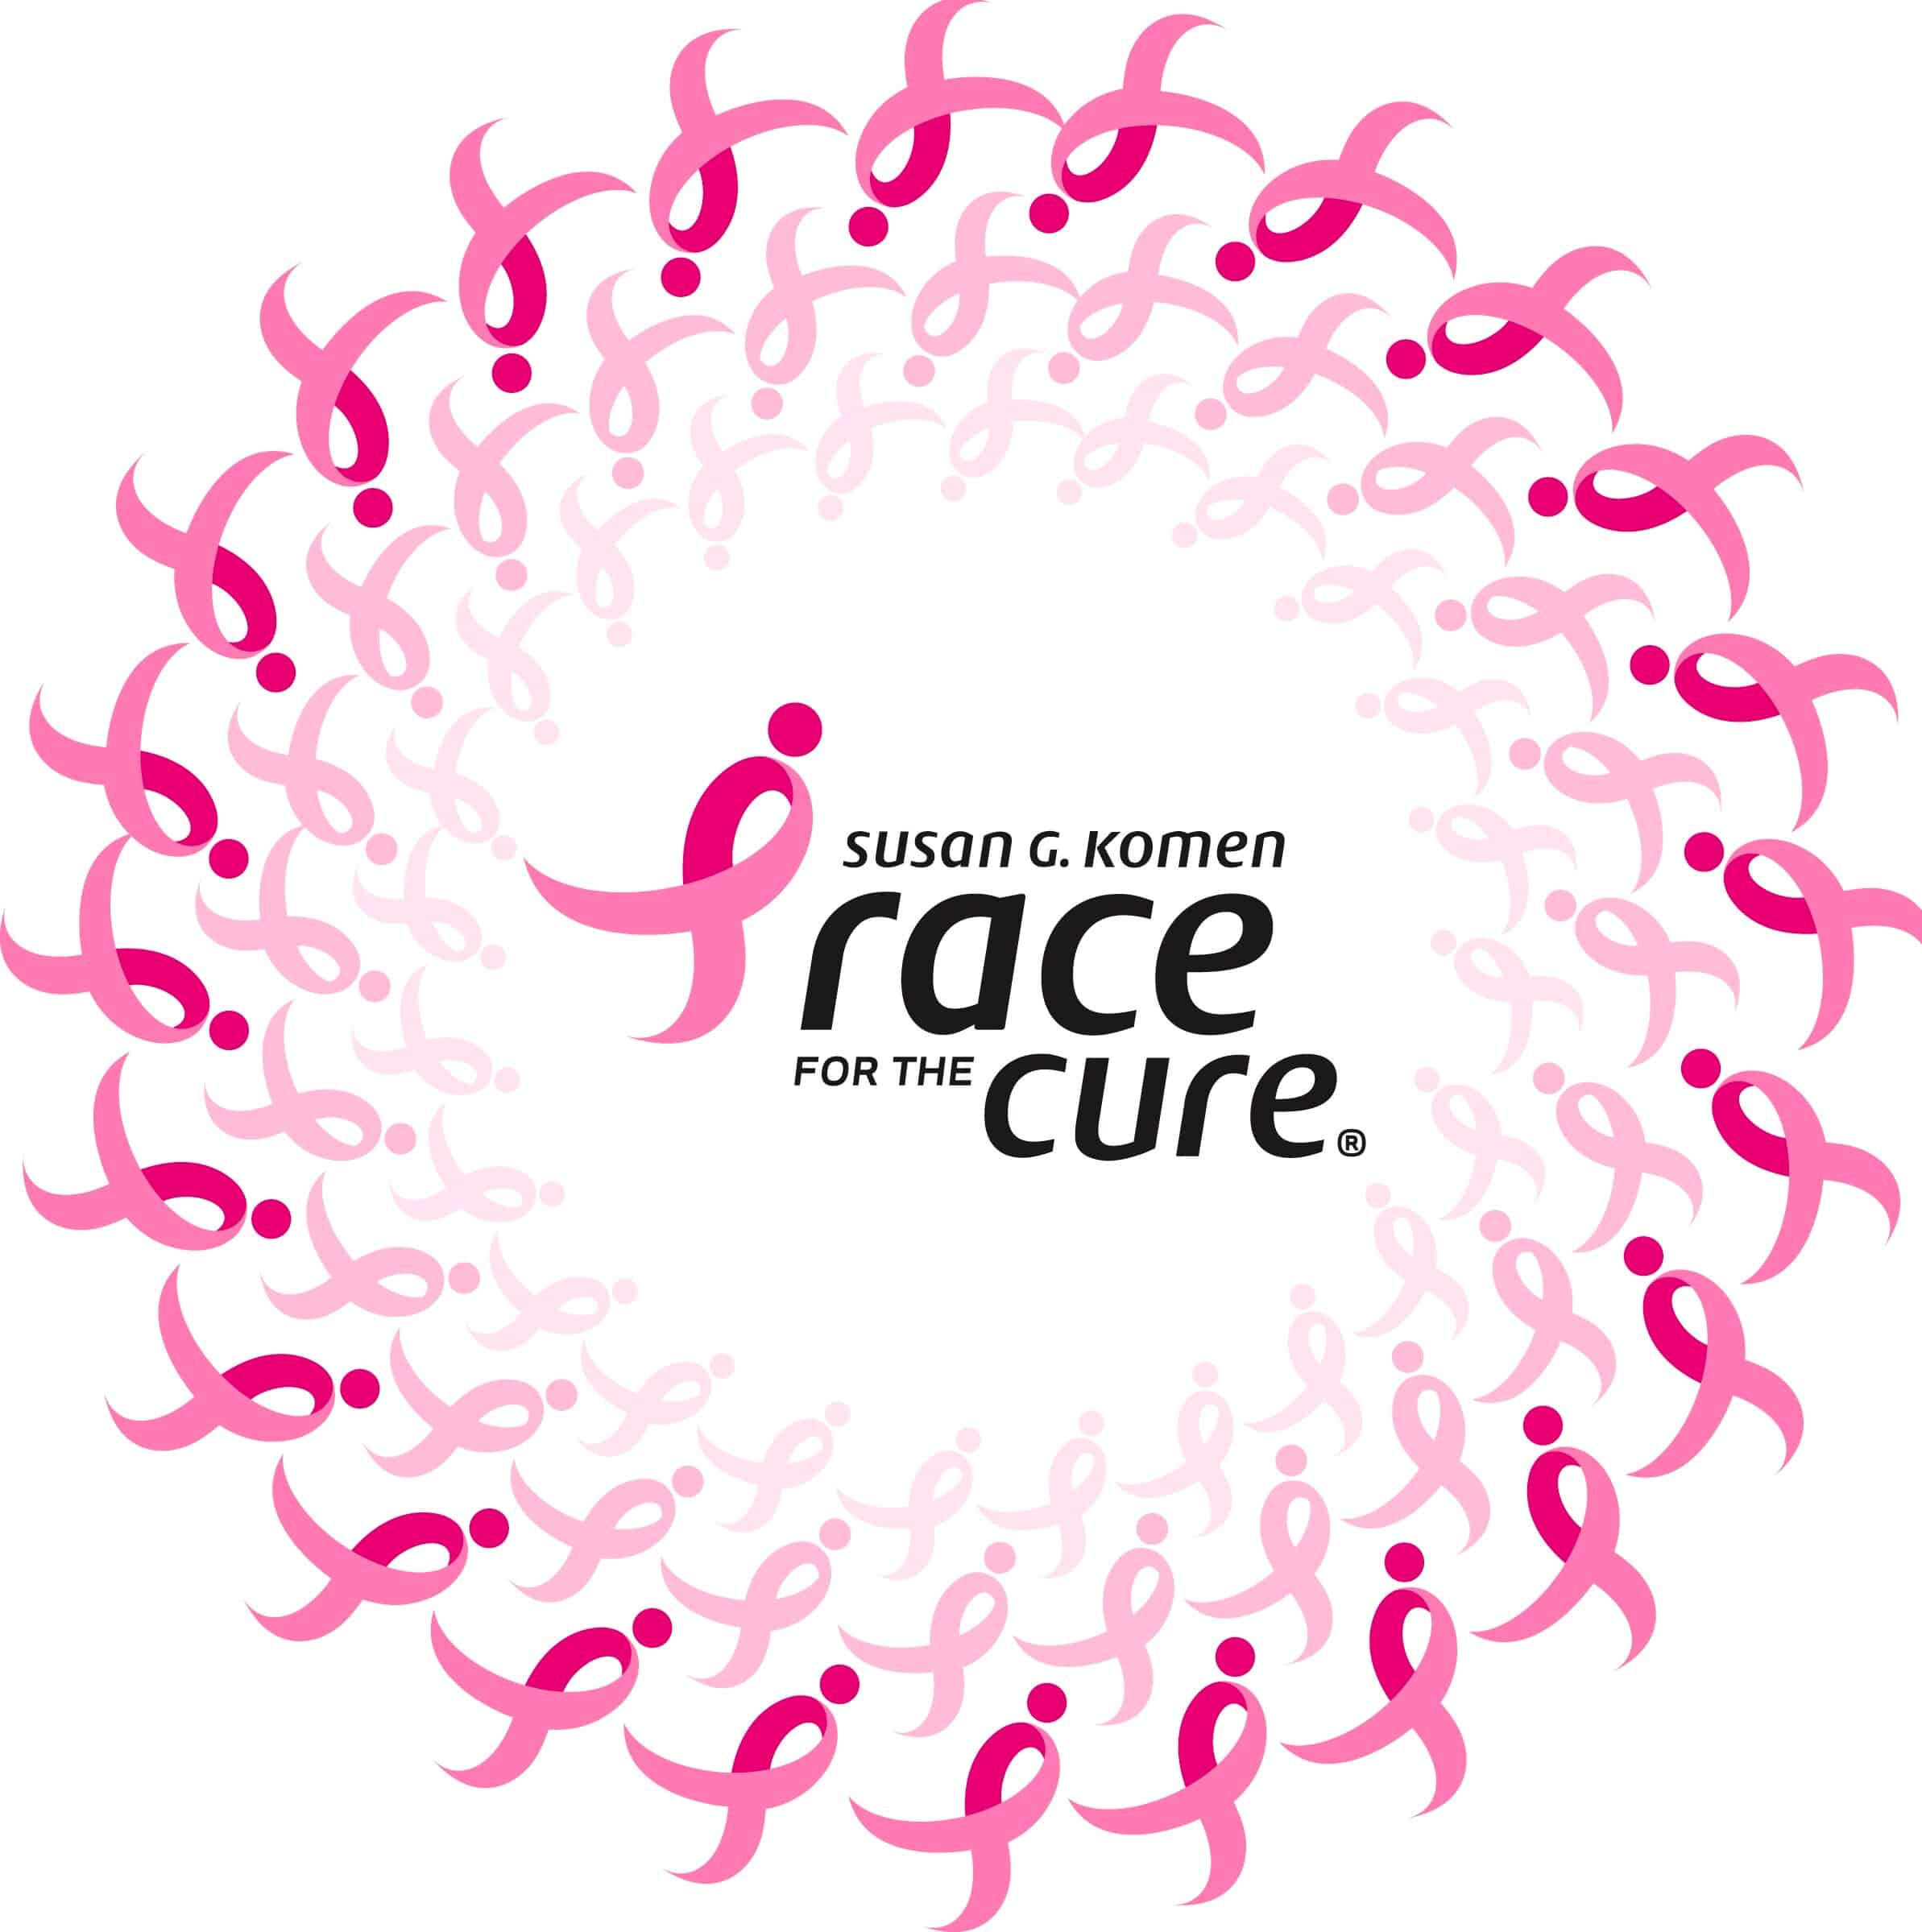 2017 Susan G. Komen Ozark Race for the Cure